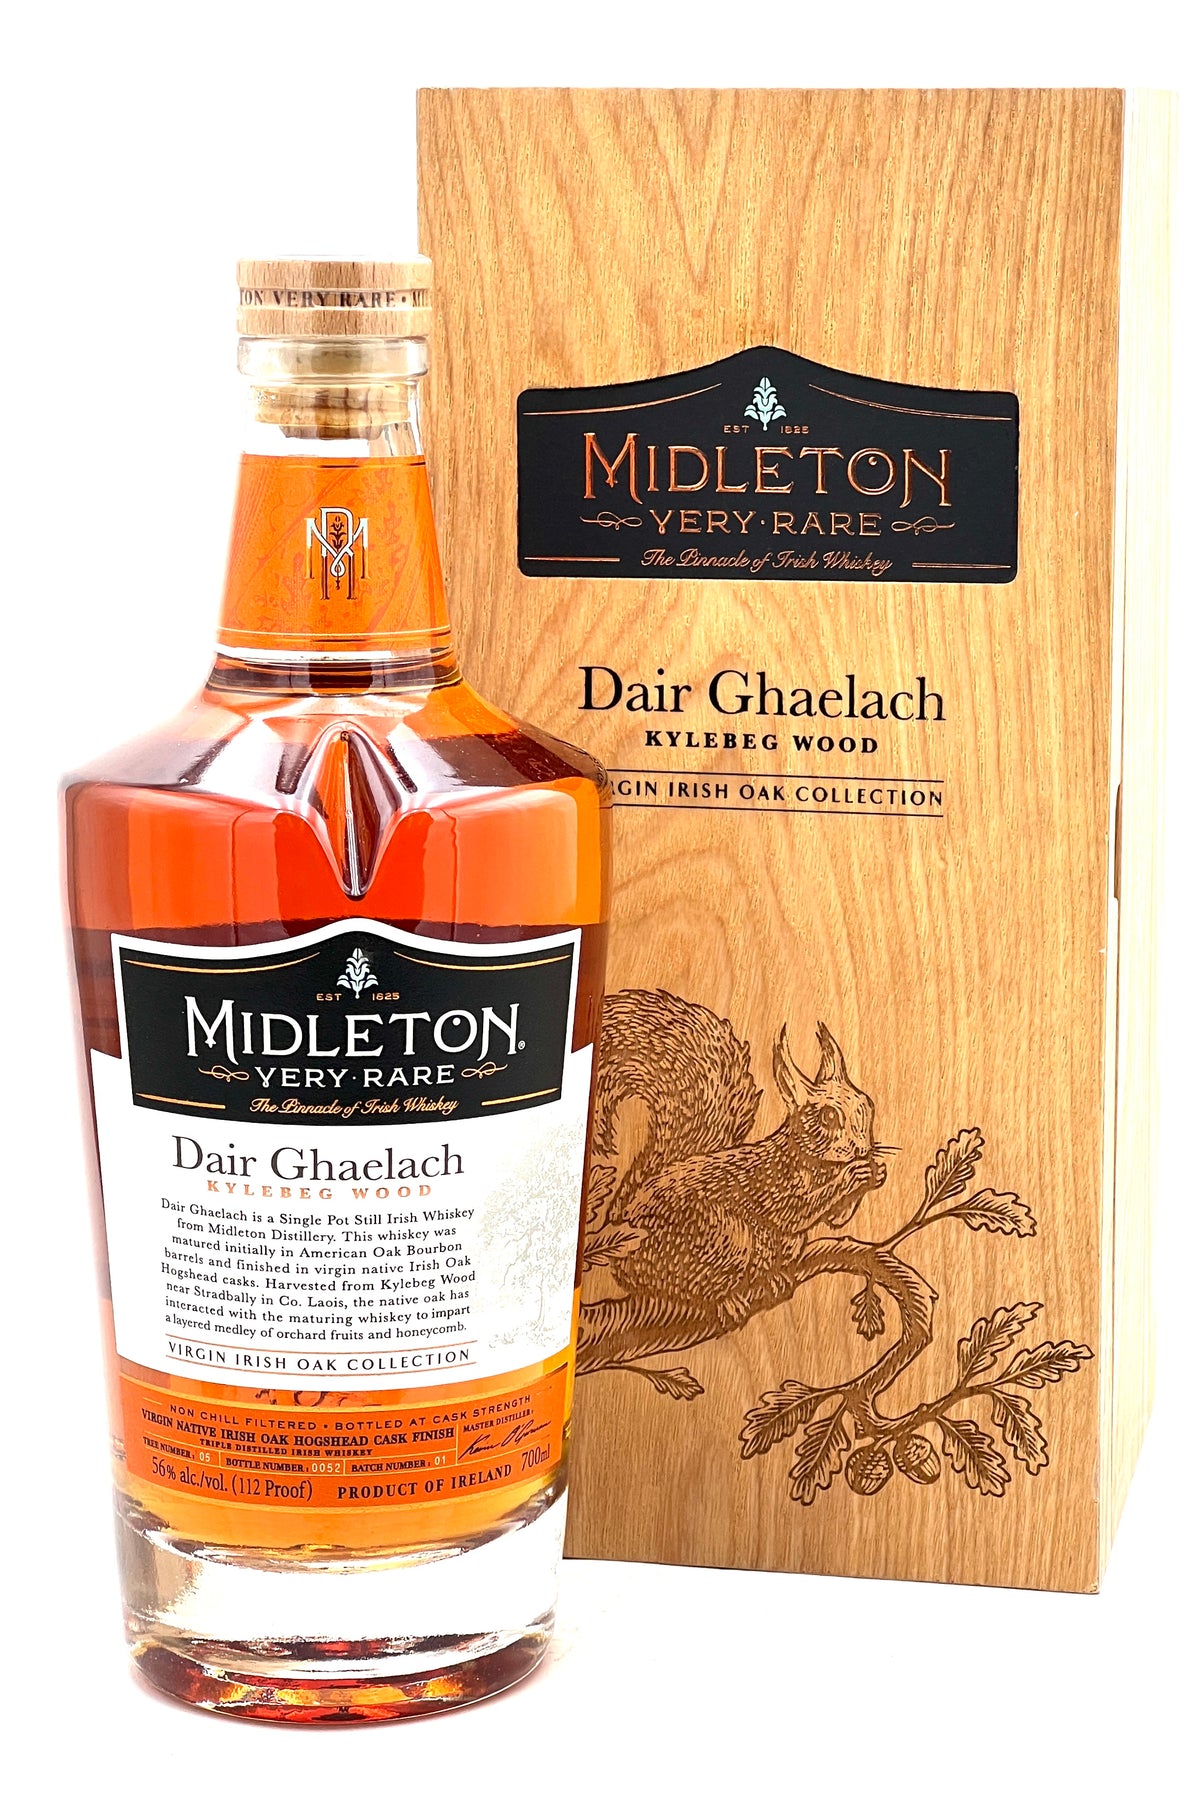 Midleton Dair Ghaelach Kylebeg Forest Tree #7 Irish Whisky